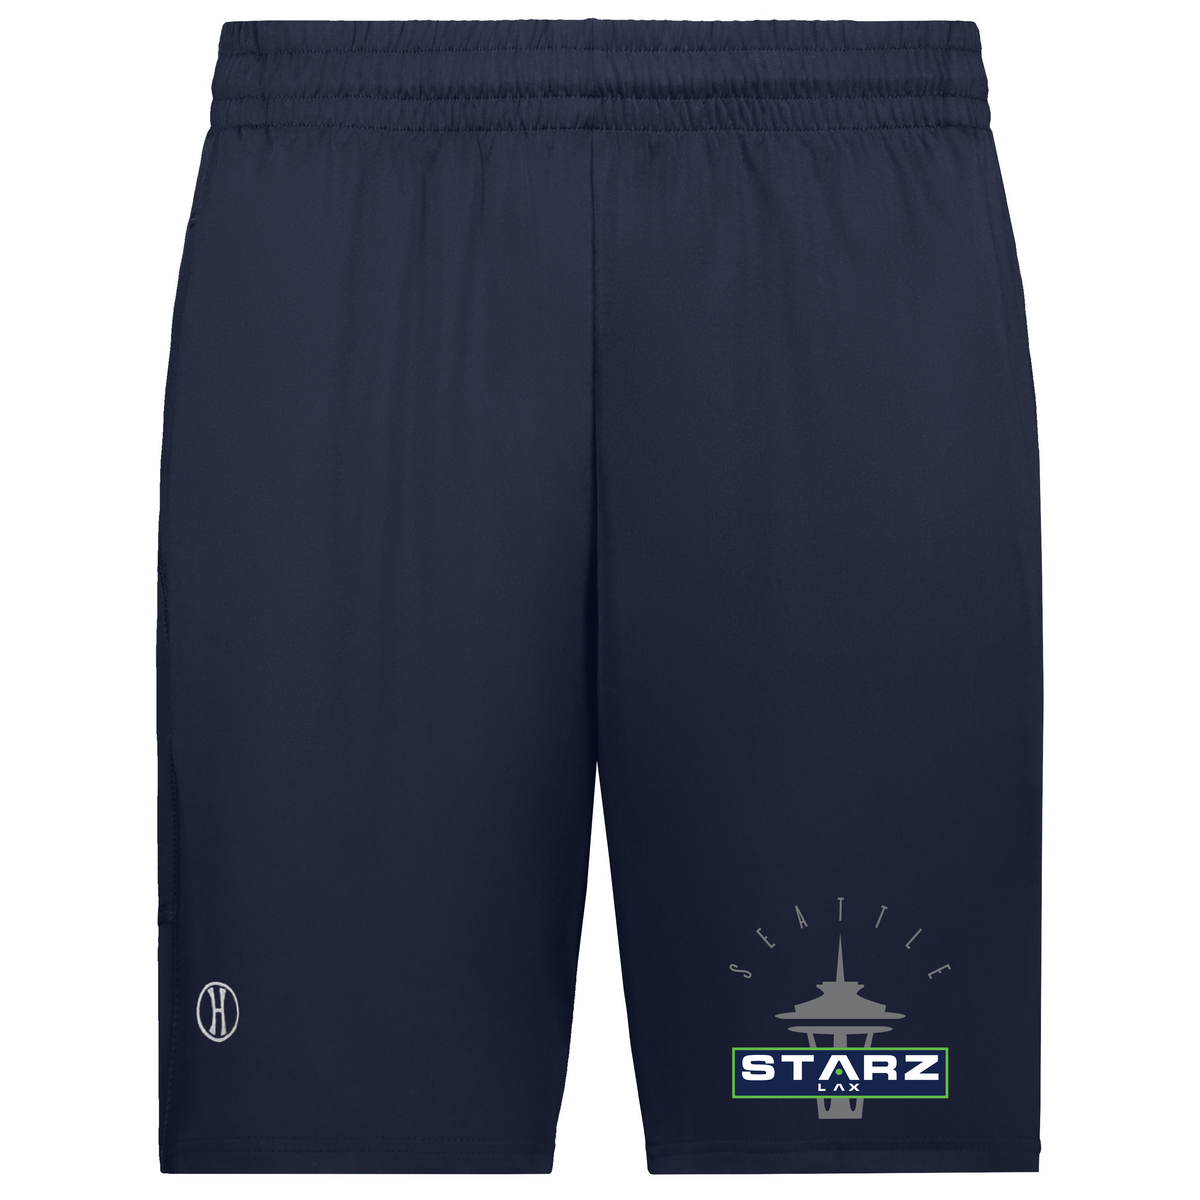 Seattle Starz Lacrosse Club CoolCore Shorts